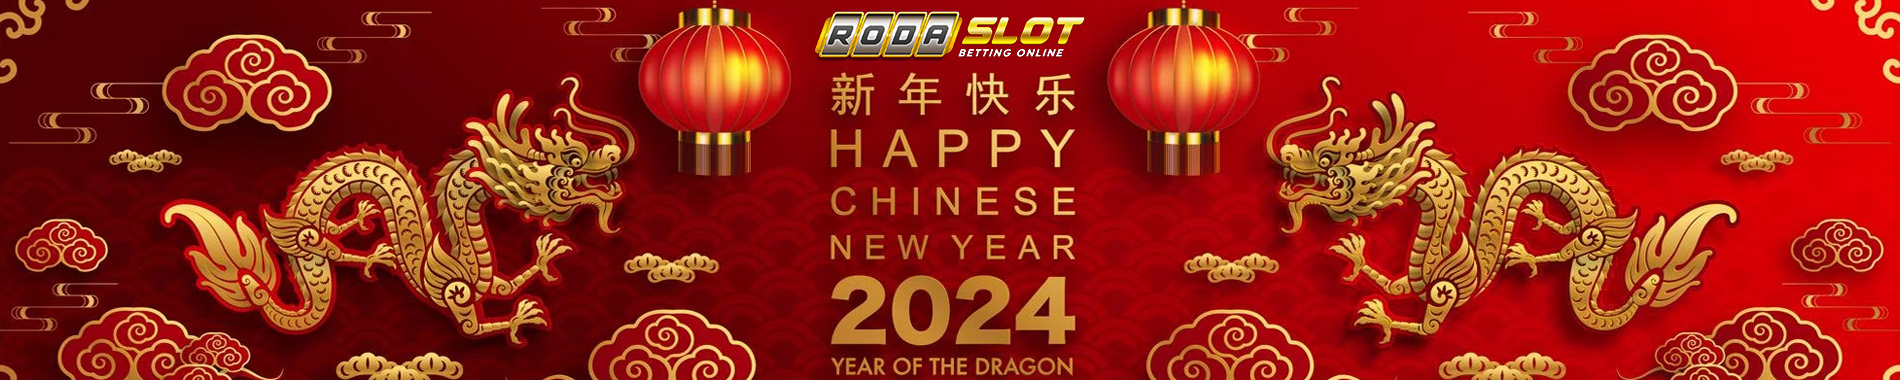  happy chinese new year 2024